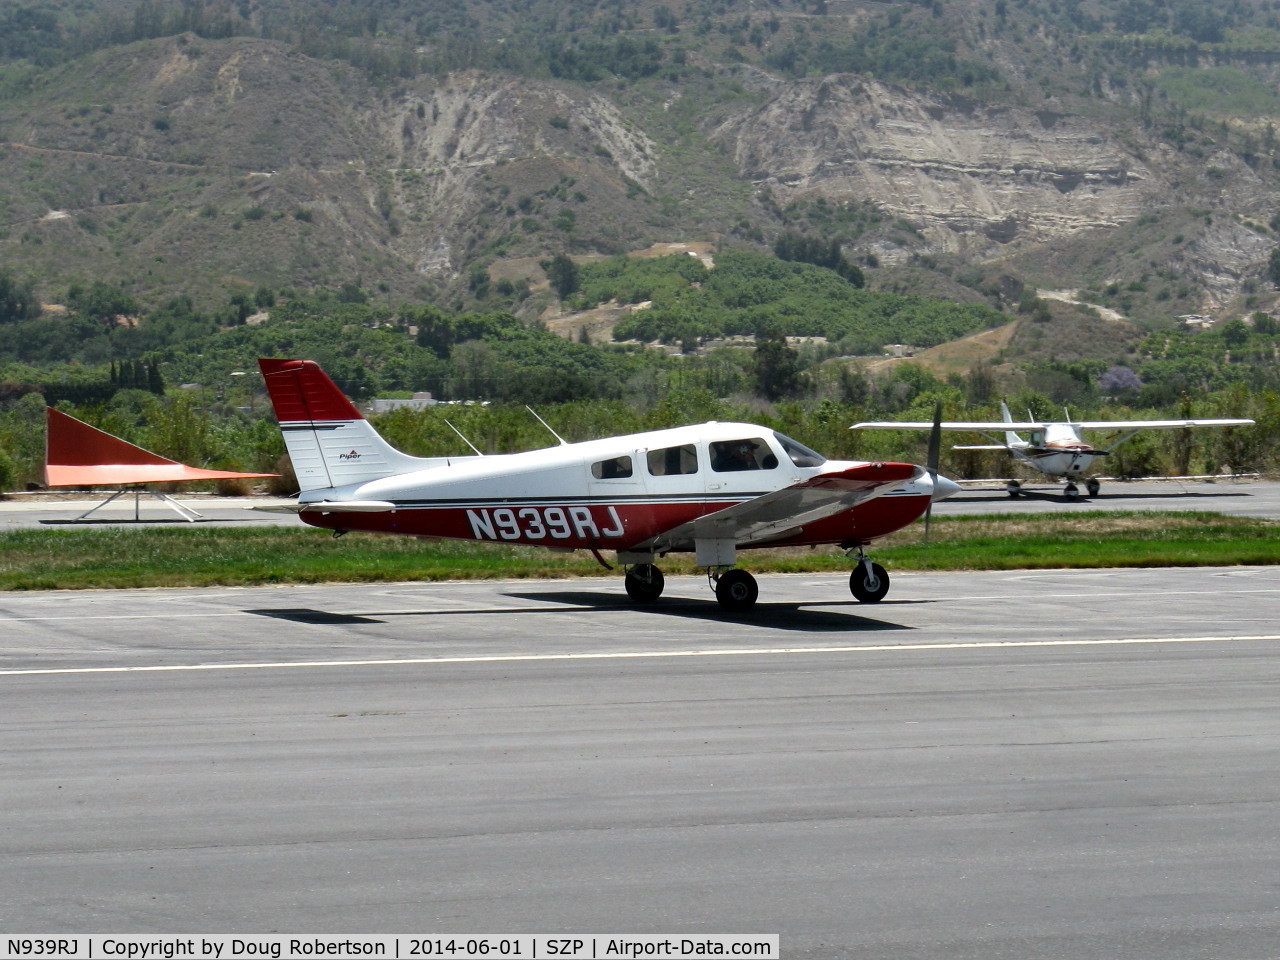 N939RJ, 1998 Piper PA-28-181 C/N 2843136, 1998 Piper PA-28-181 ARCHER III, Lycoming O-360-A1D 180 Hp, landing roll Rwy 22